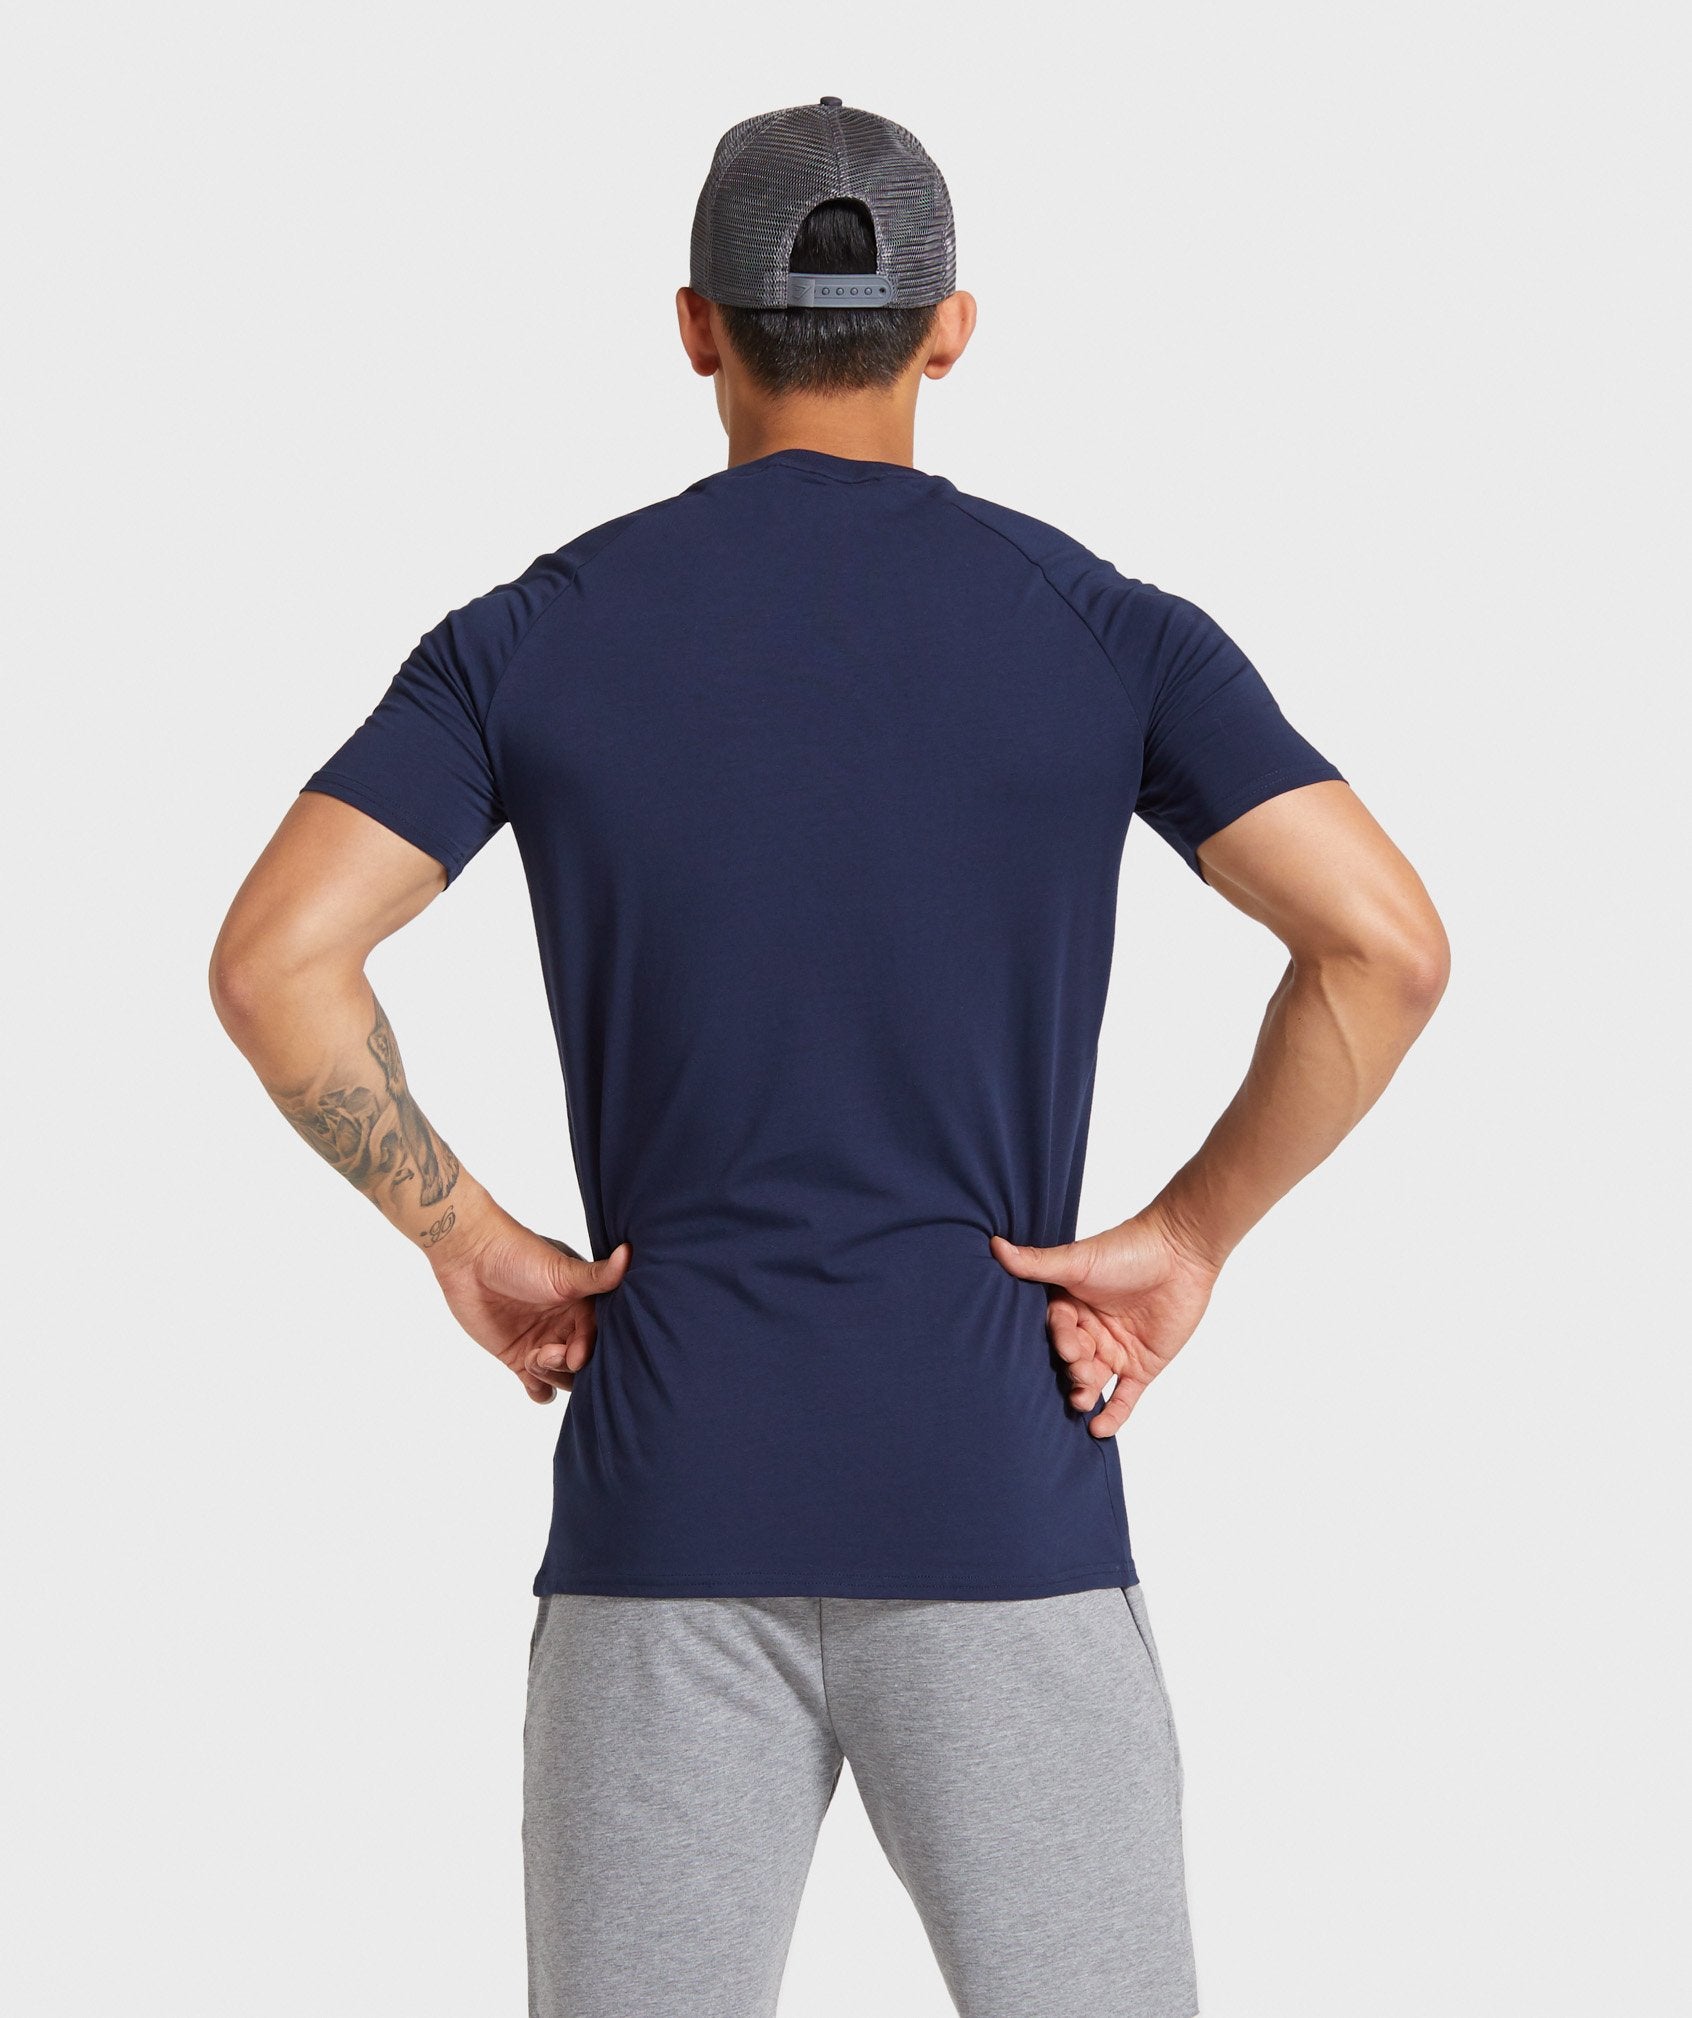 Gymshark Apollo T-Shirt - Dark Blue Image B